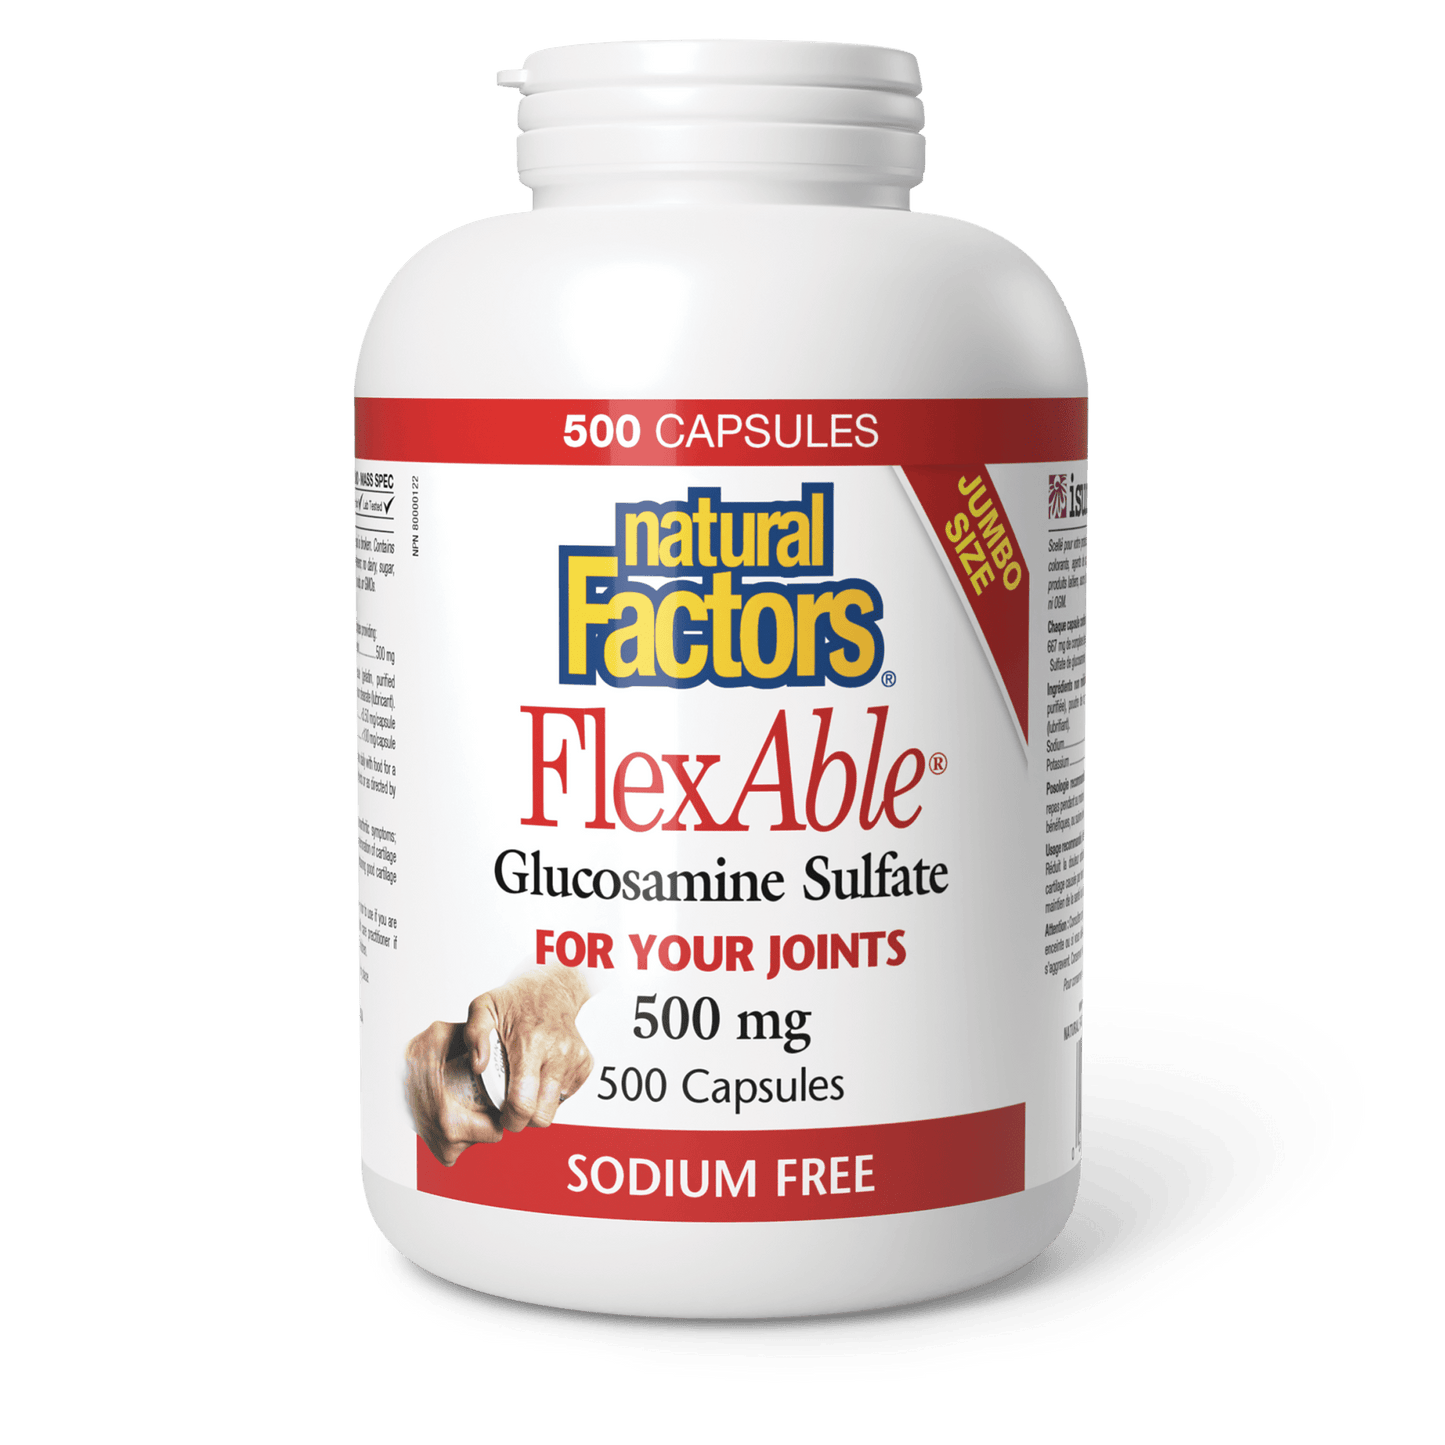 FlexAble Glucosamine Sulfate 500 mg, Natural Factors|v|image|26592